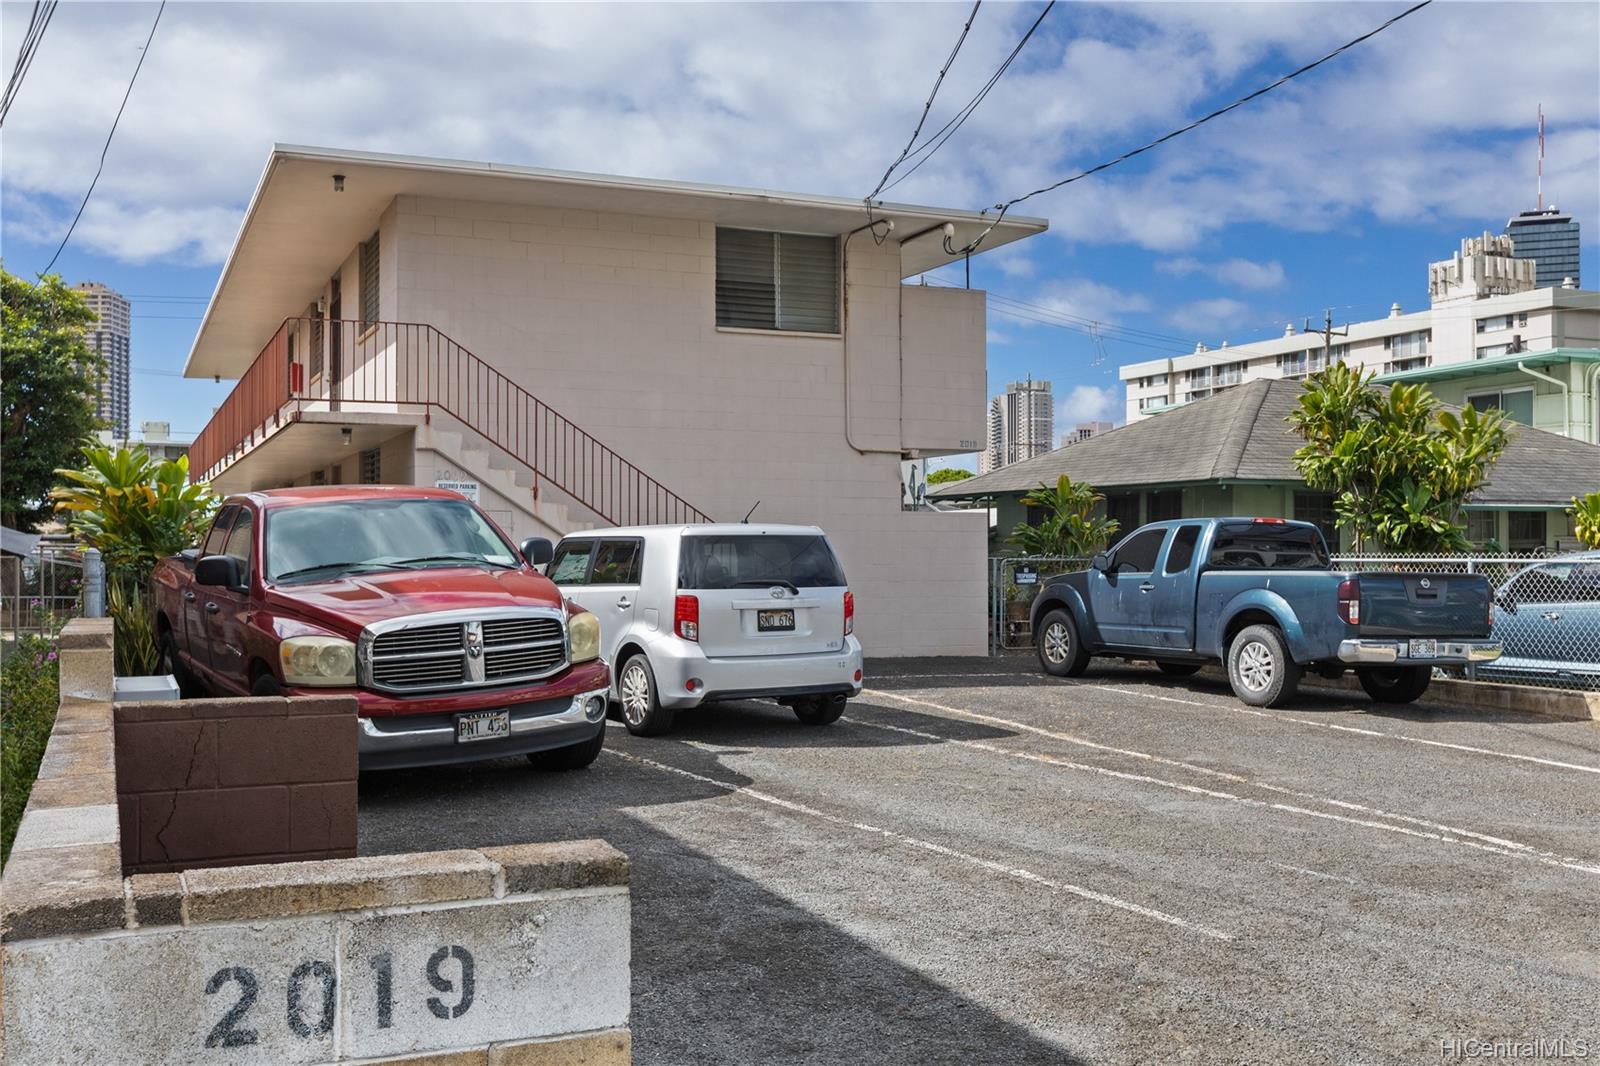 2019 Waiola Street Honolulu, HI 96826